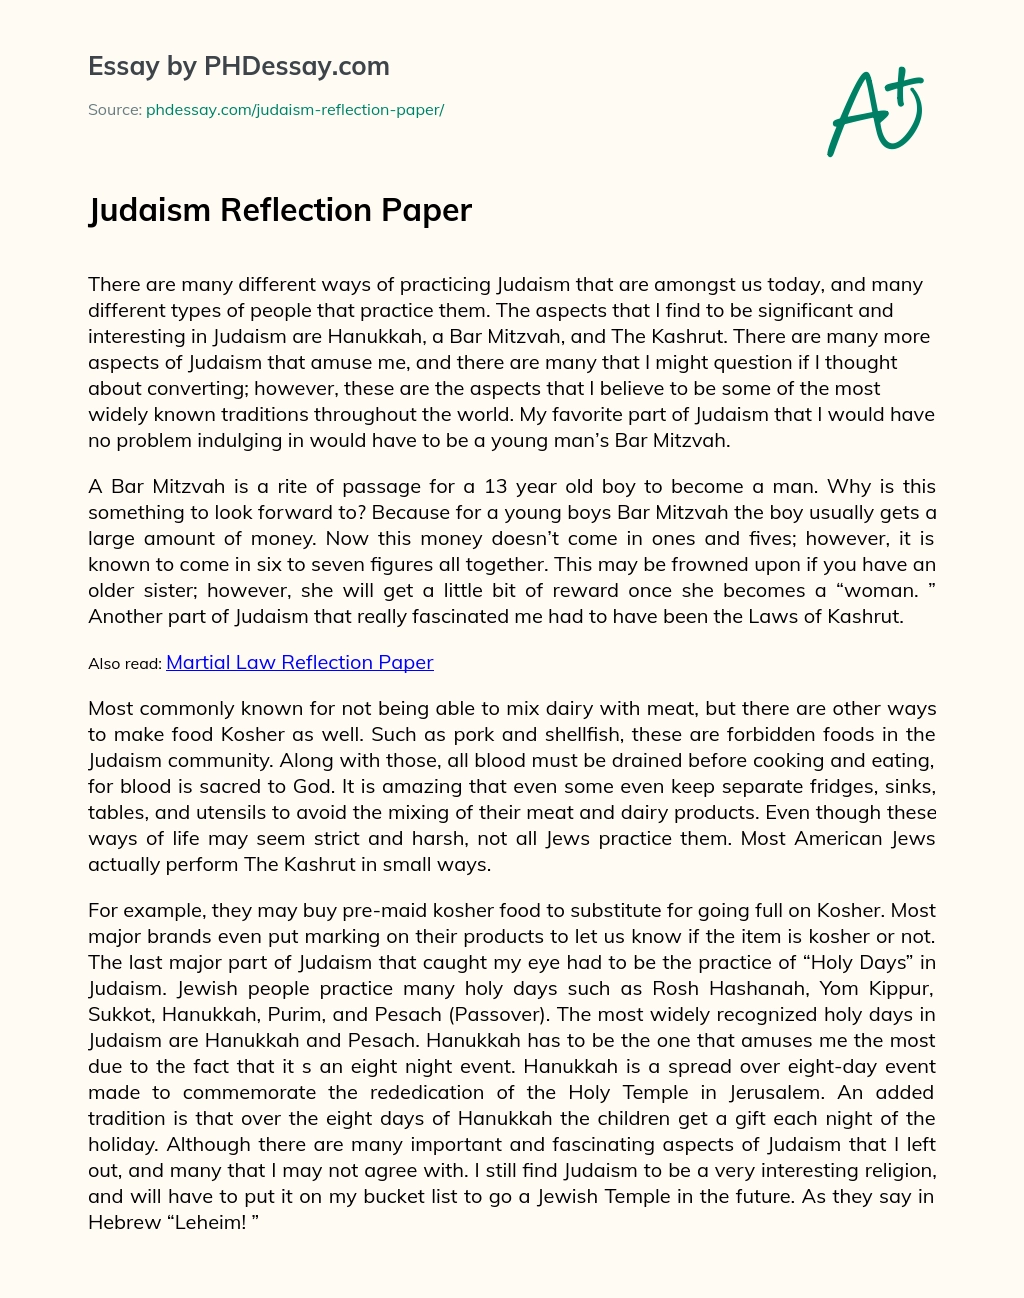 Judaism Reflection Paper essay